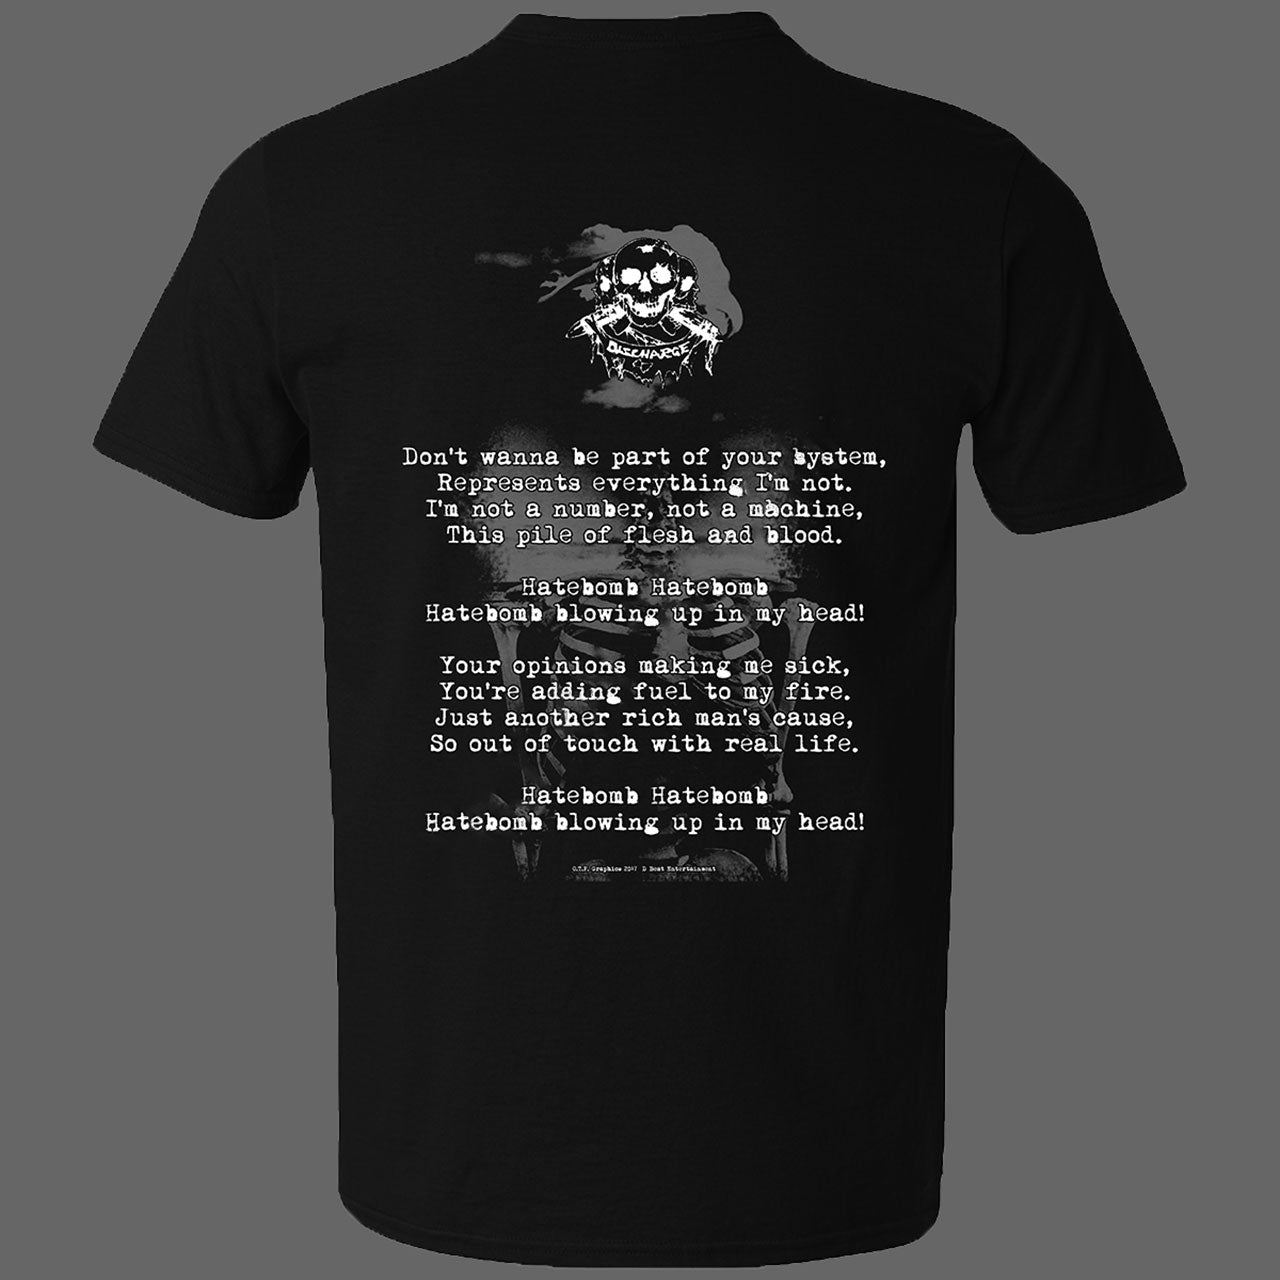 Discharge - Hatebomb (T-Shirt)